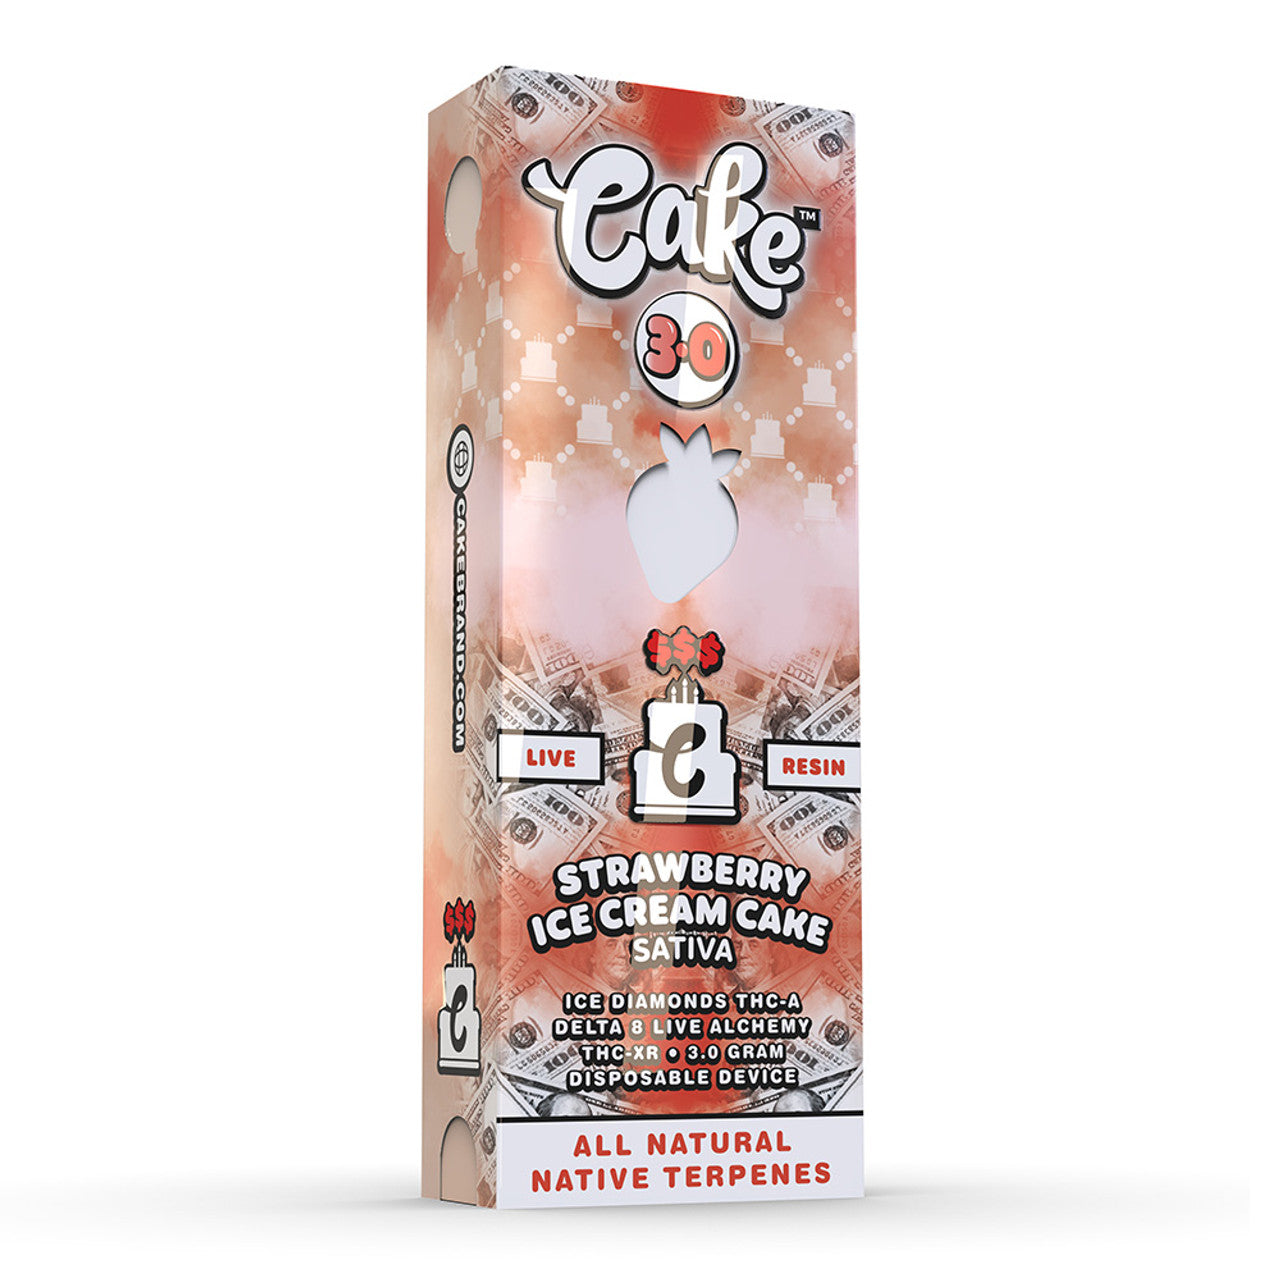 CAKE 3.0 Money Line Live Resin Ice Diamonds THC-A + Delta 8 Live Alchemy + THC-XR Disposable 3G - Strawberry Ice Cream Cake (Sativa)